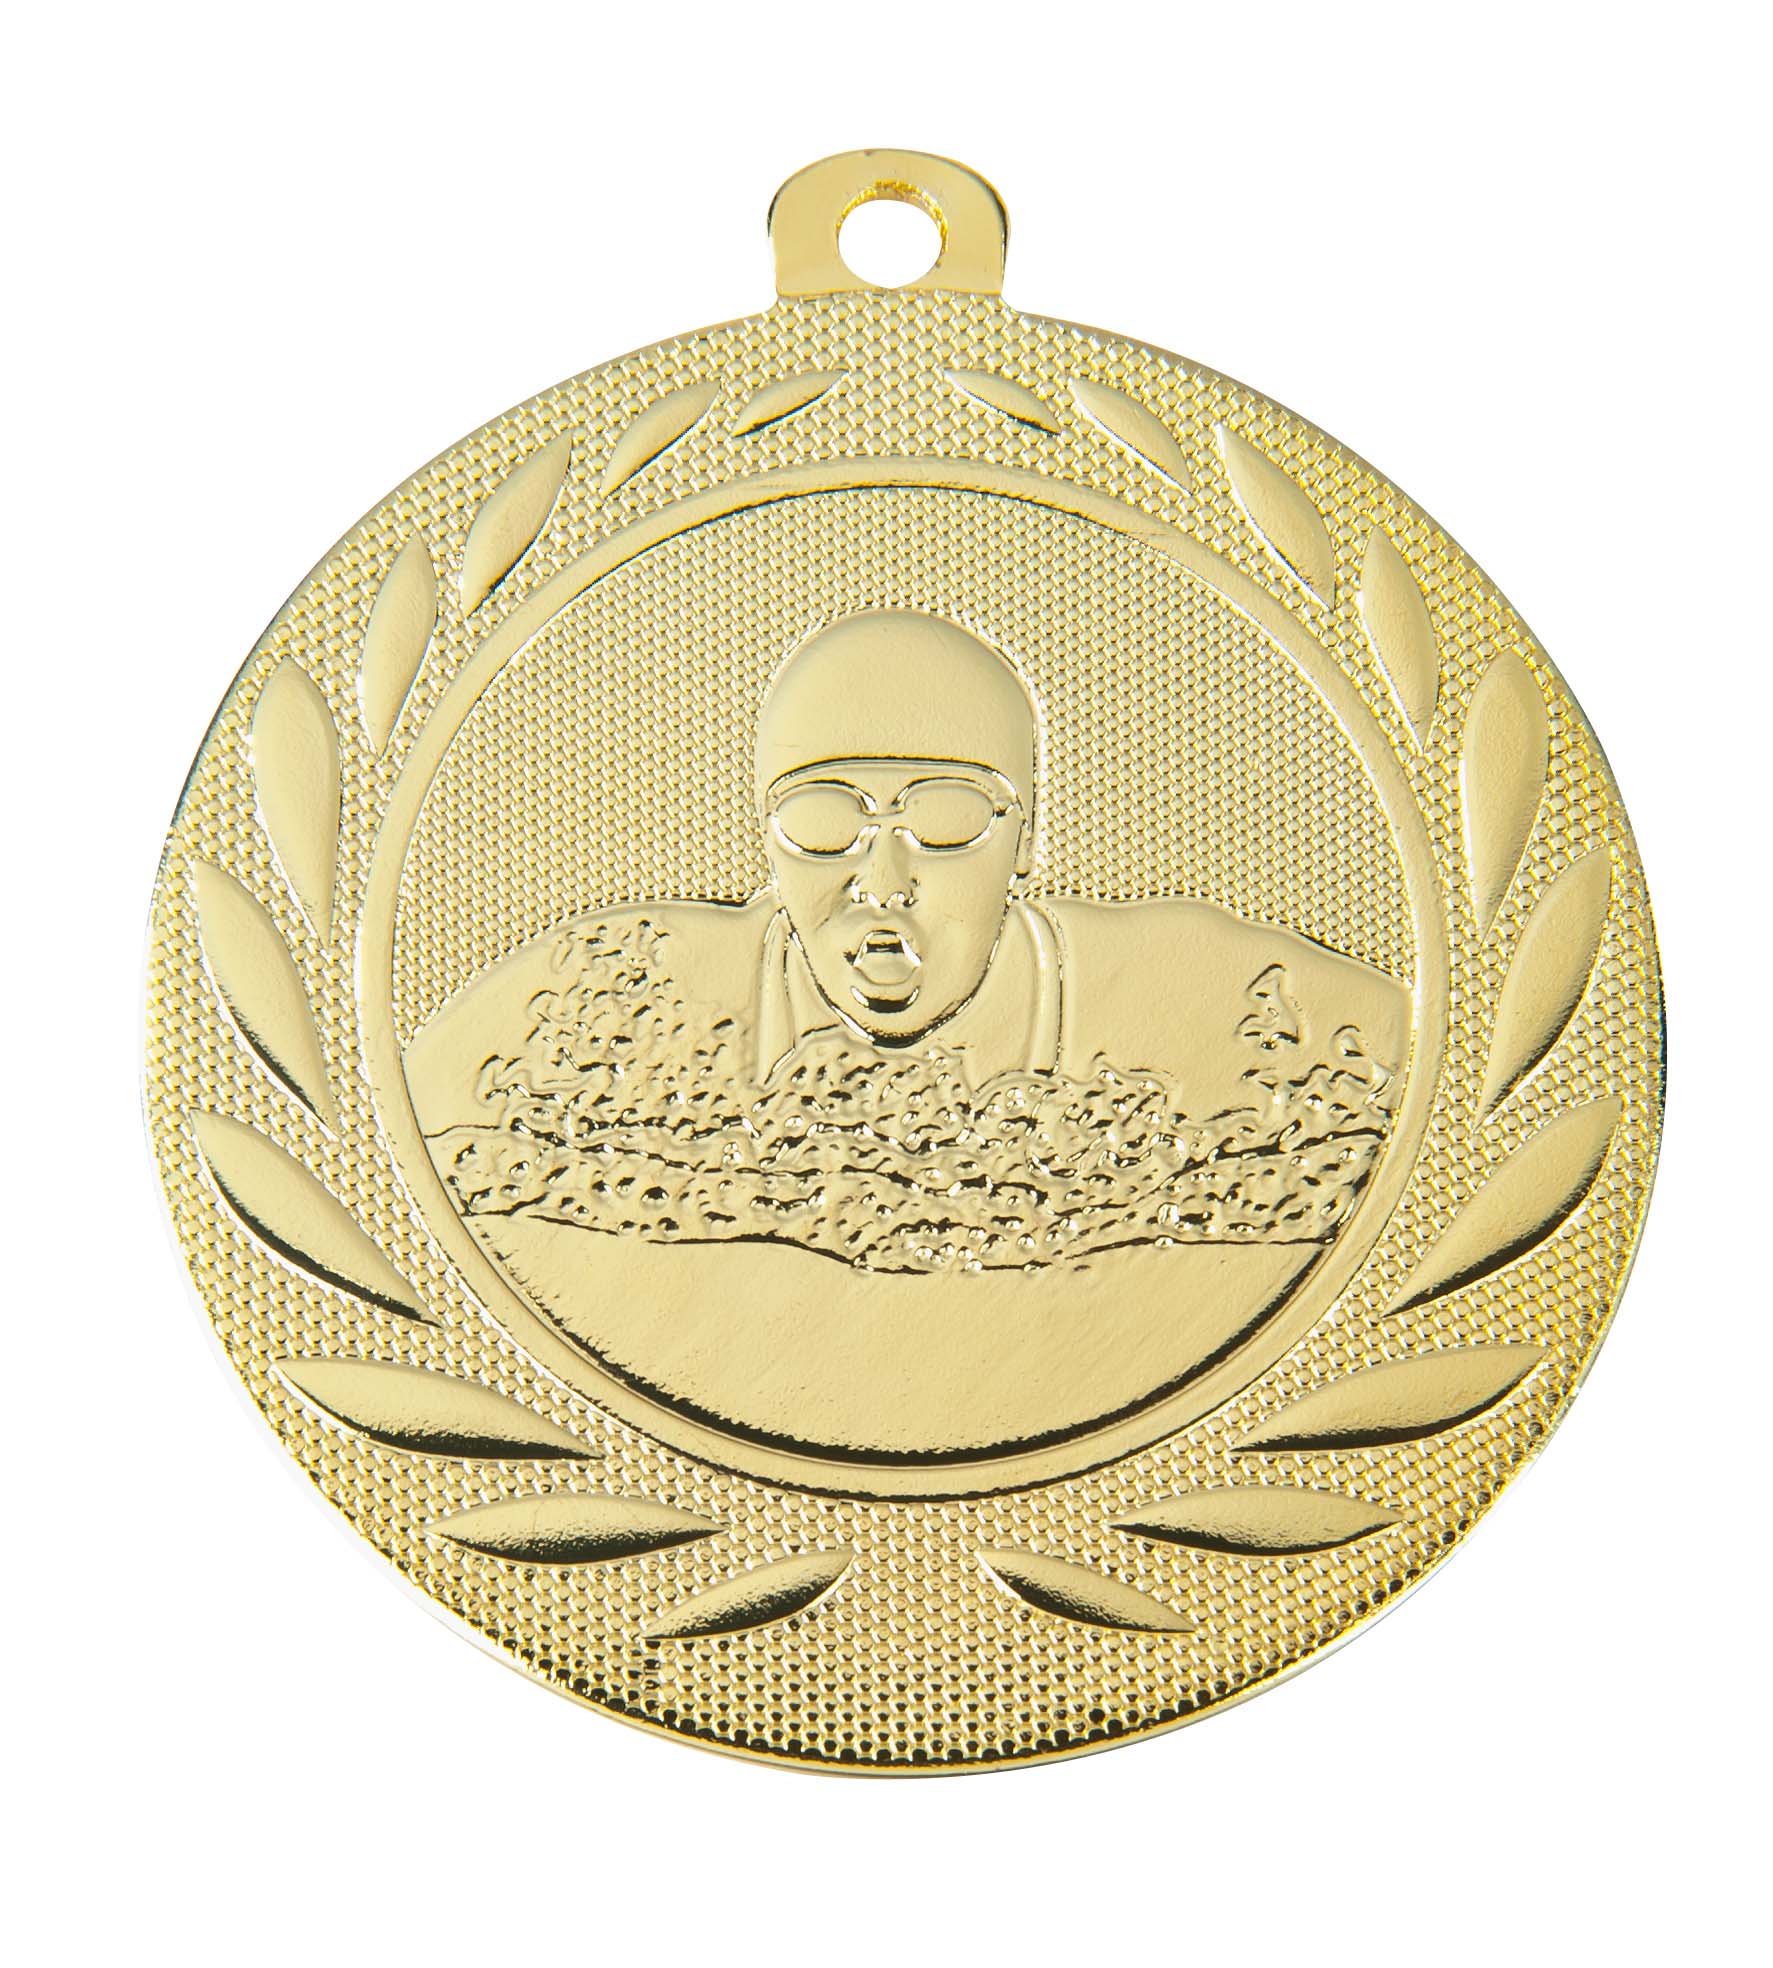 Schwimm-Medaille DI5000H inkl. Band und Beschriftung Gold Unmontiert